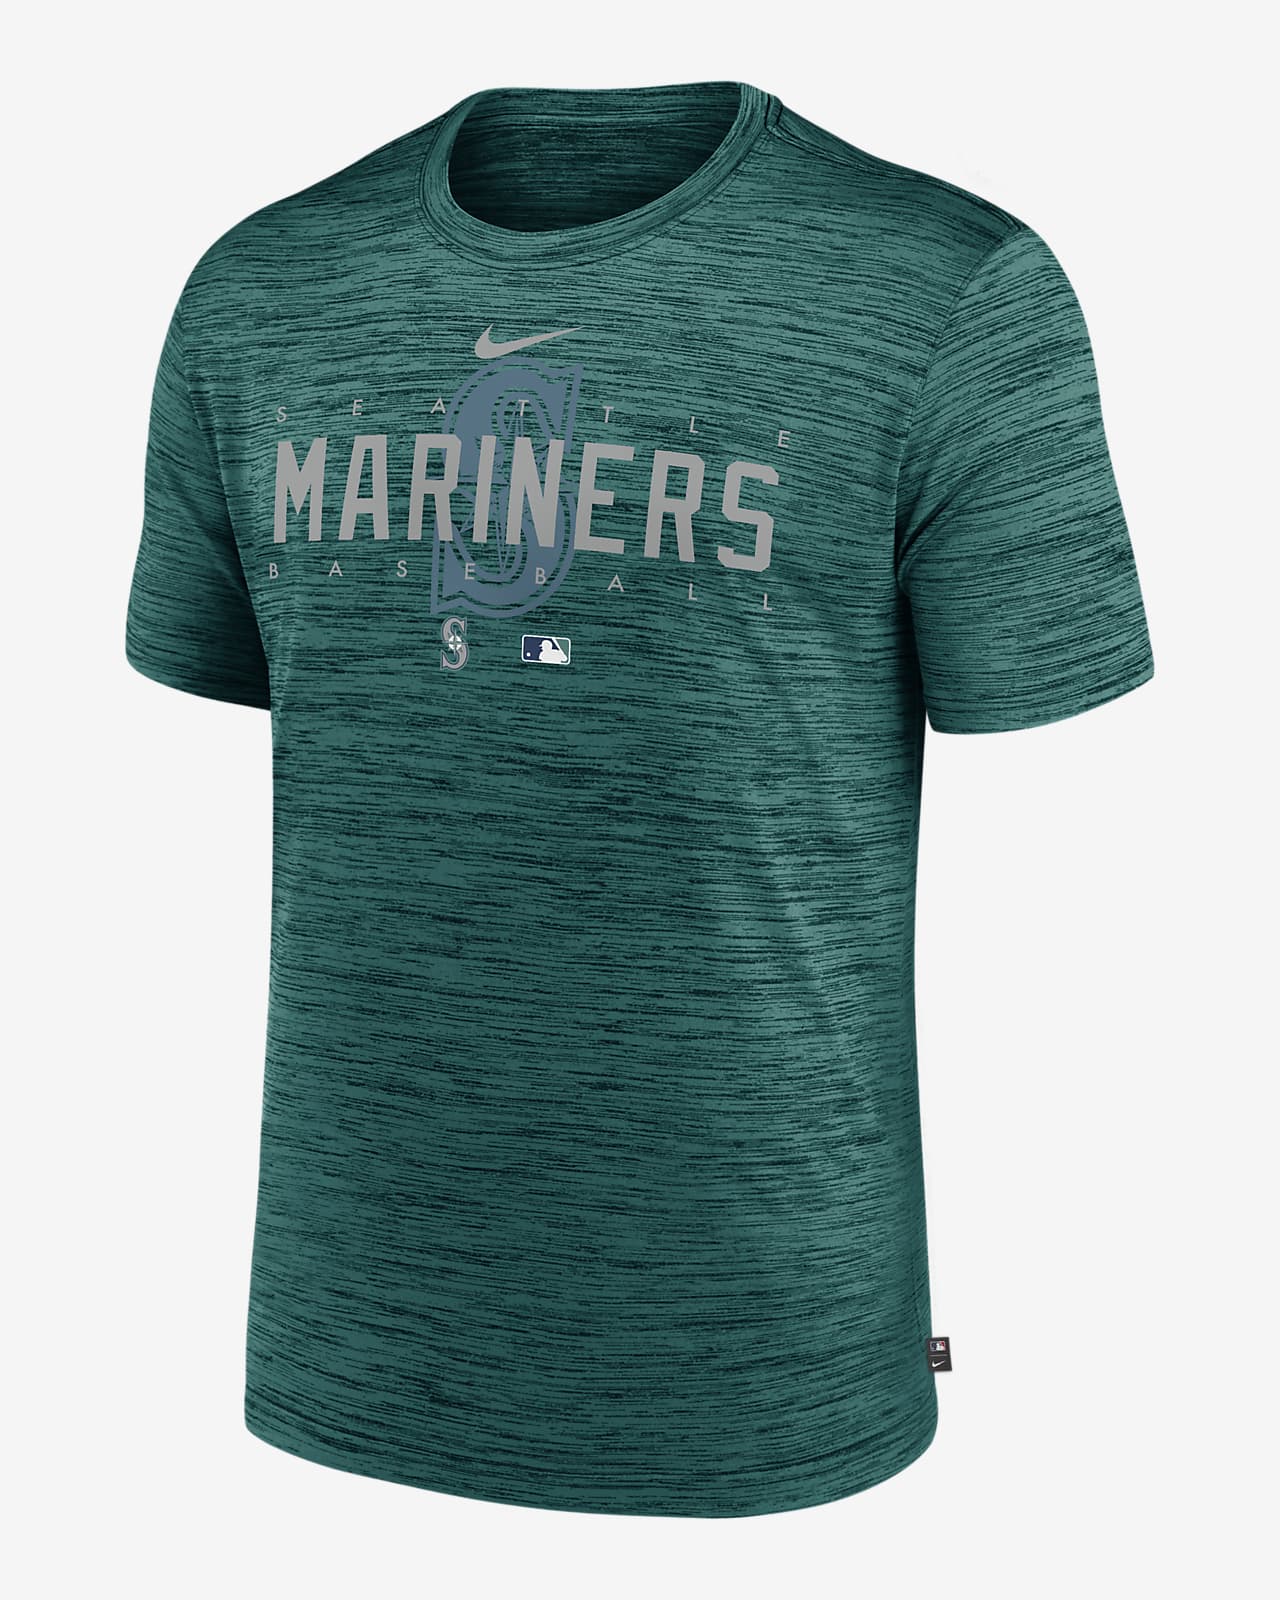 Nike Dri-FIT Velocity Practice (MLB Seattle Mariners) Men's T-Shirt.